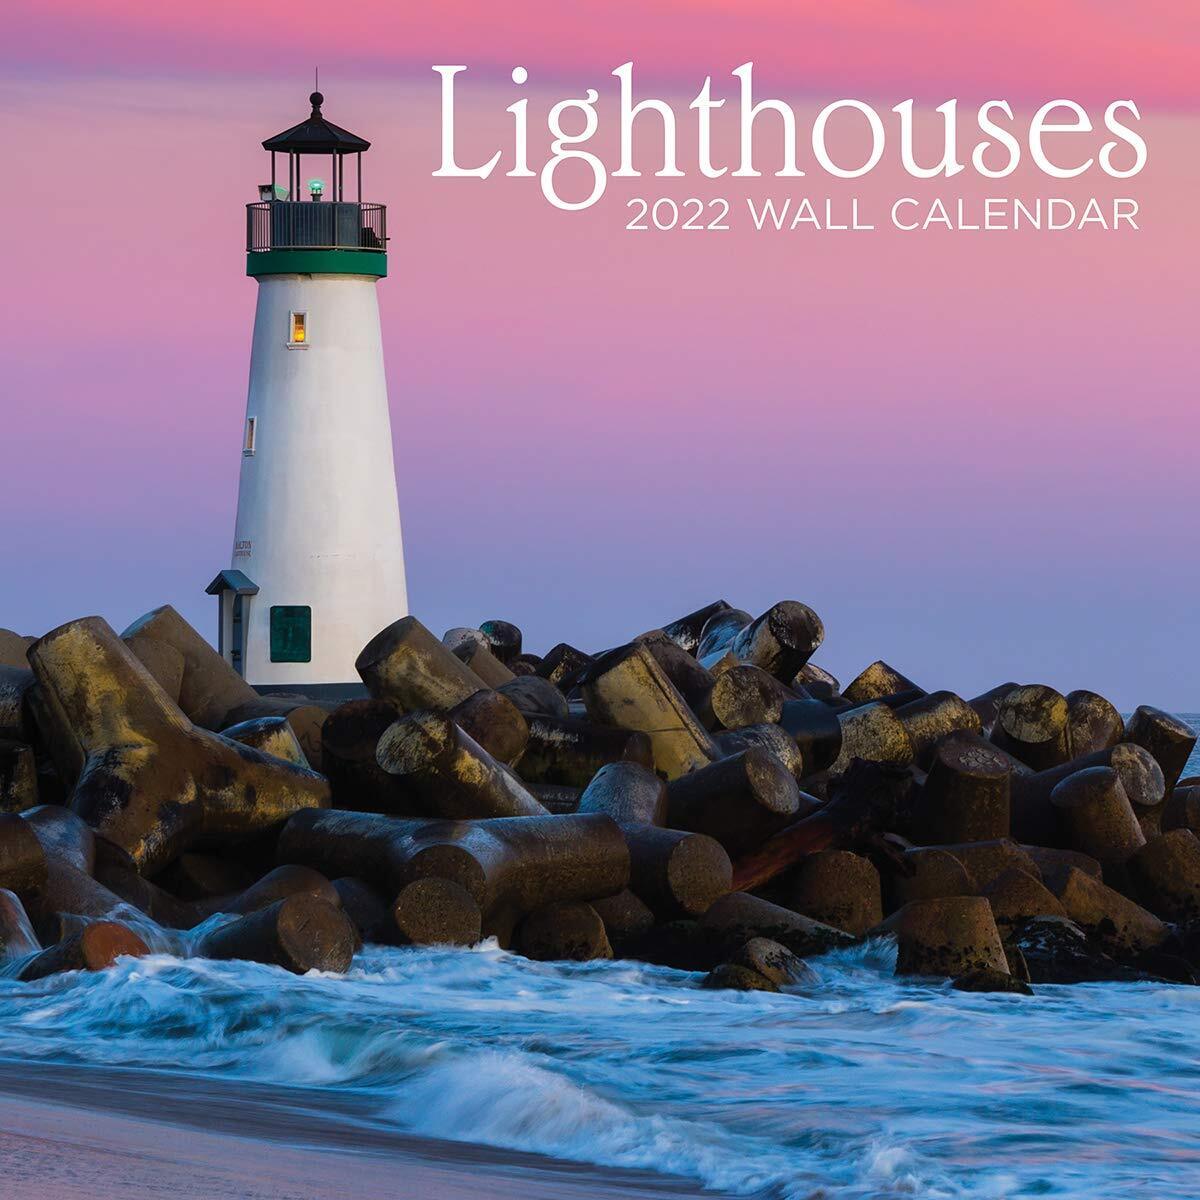 TURNER Photographic Lighthouses 12X12 Wall Calendar (22998940020)